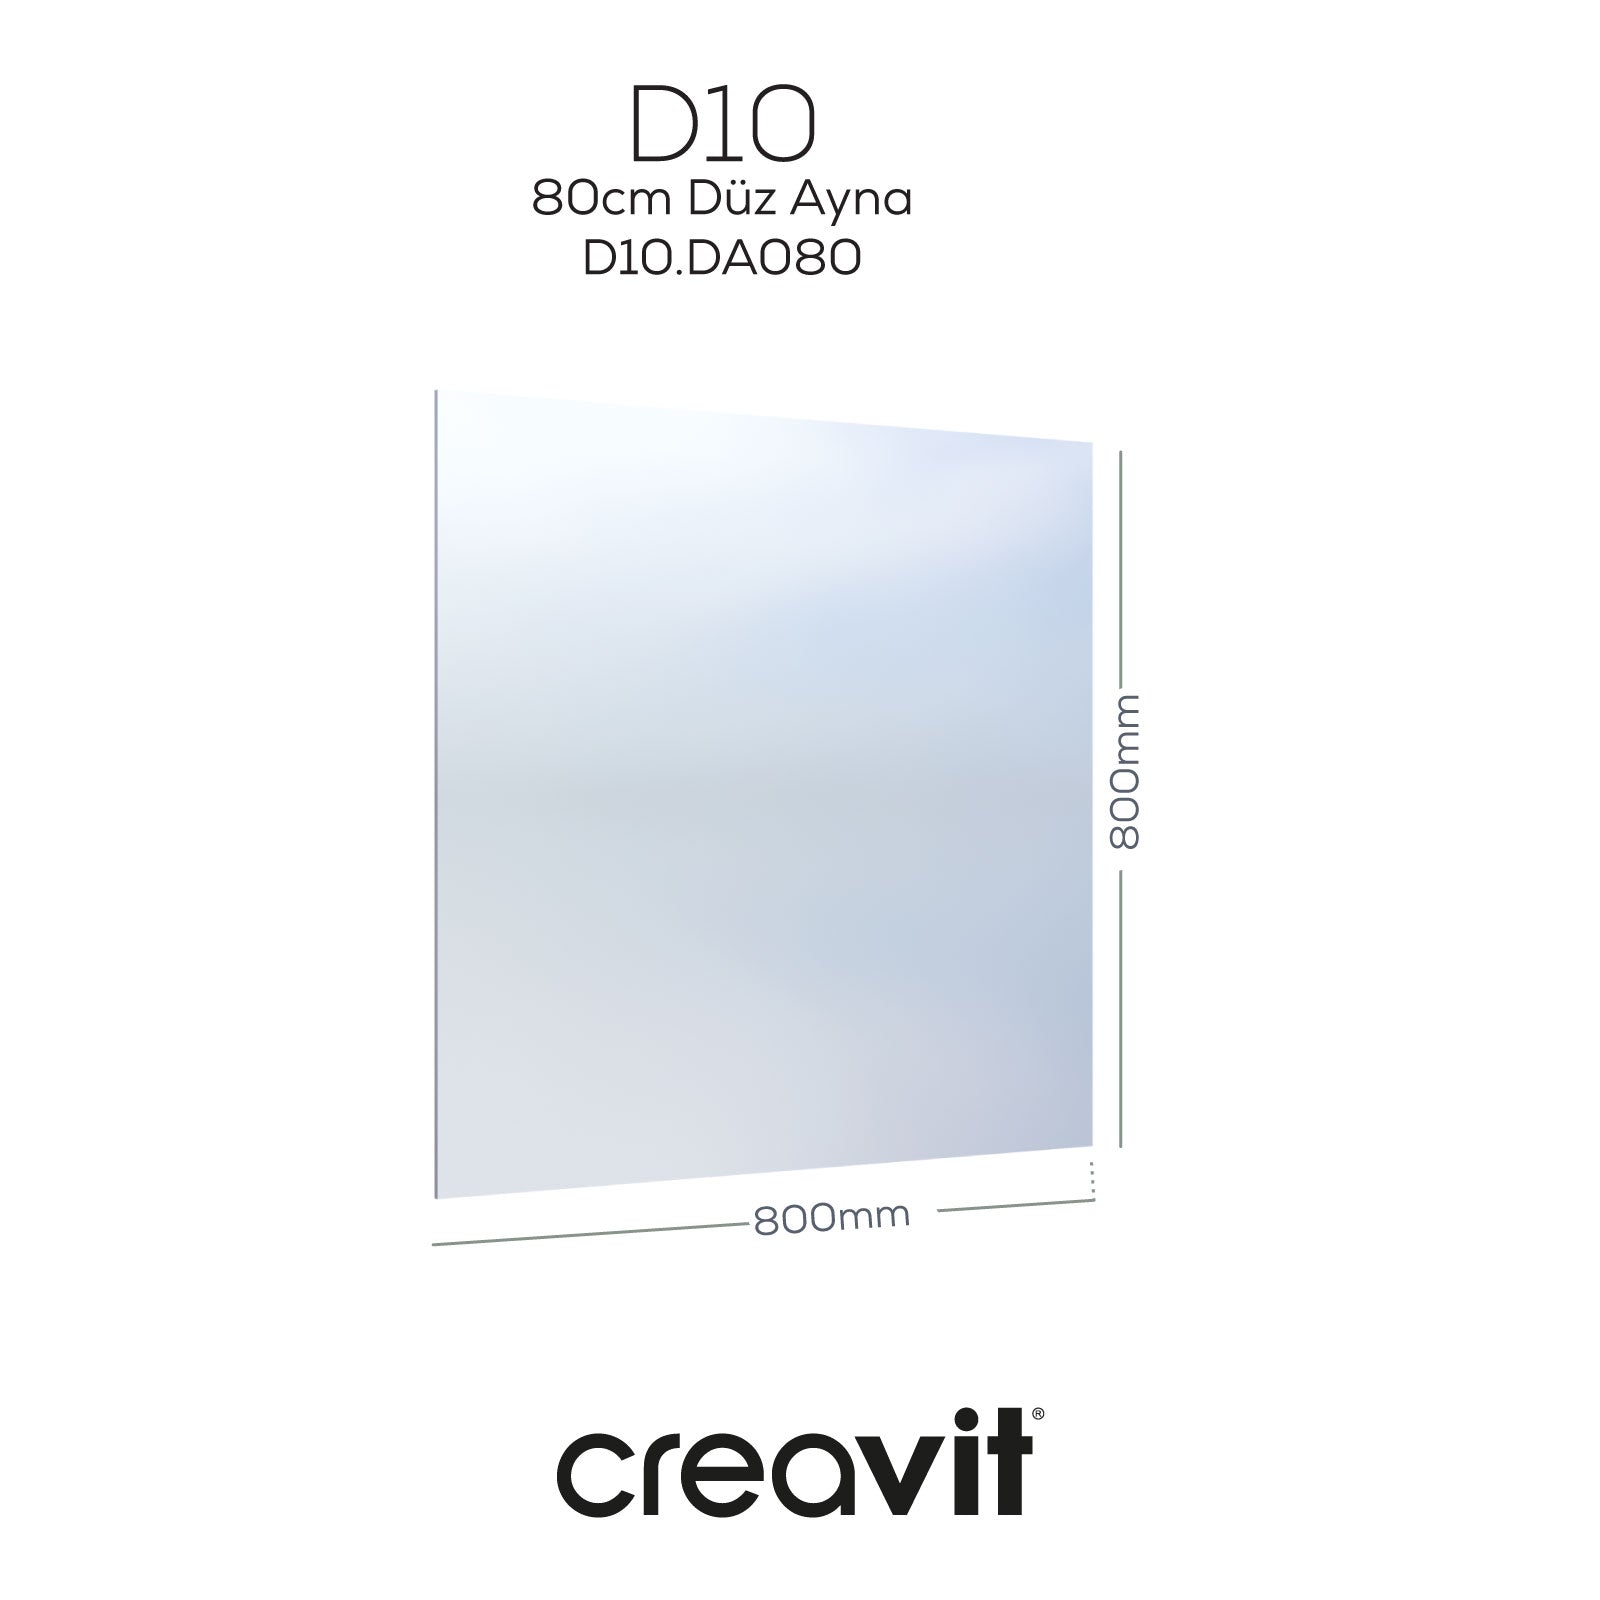 D10 80 cm Düz Ayna - Creavit | Banyo Bu Tarafta